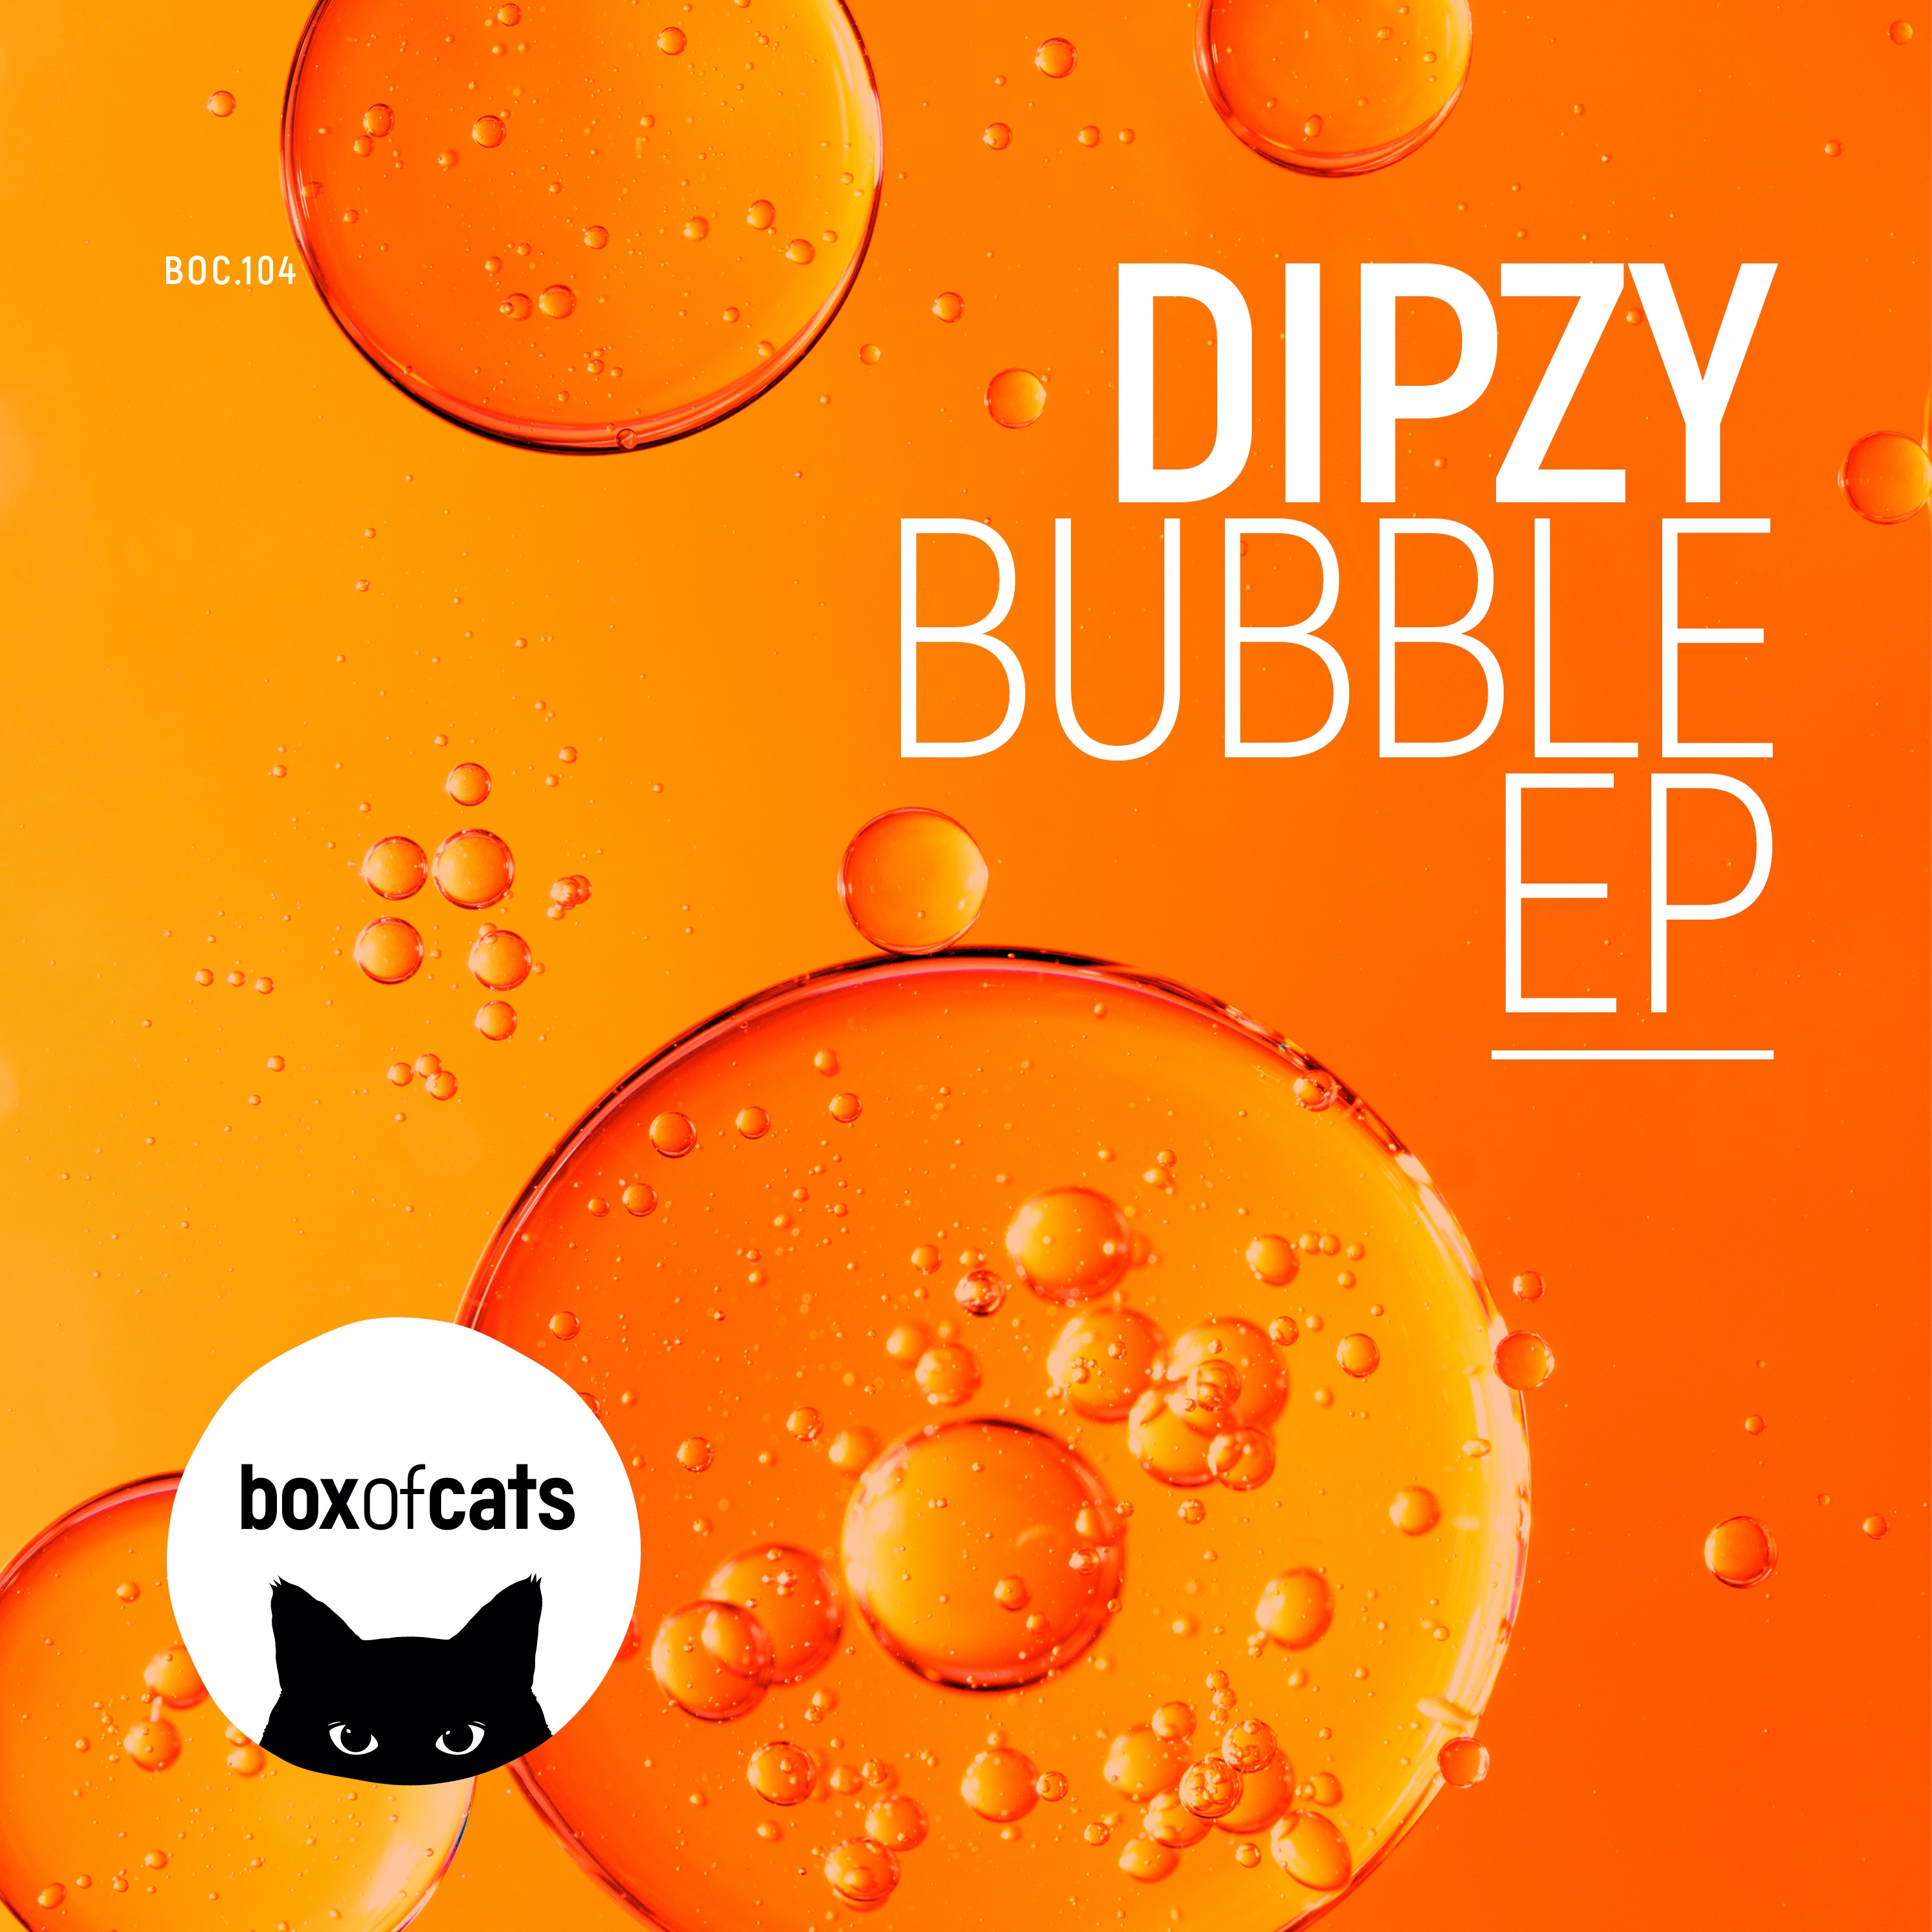 Khuphela Dipzy - Bubble (BOC104)